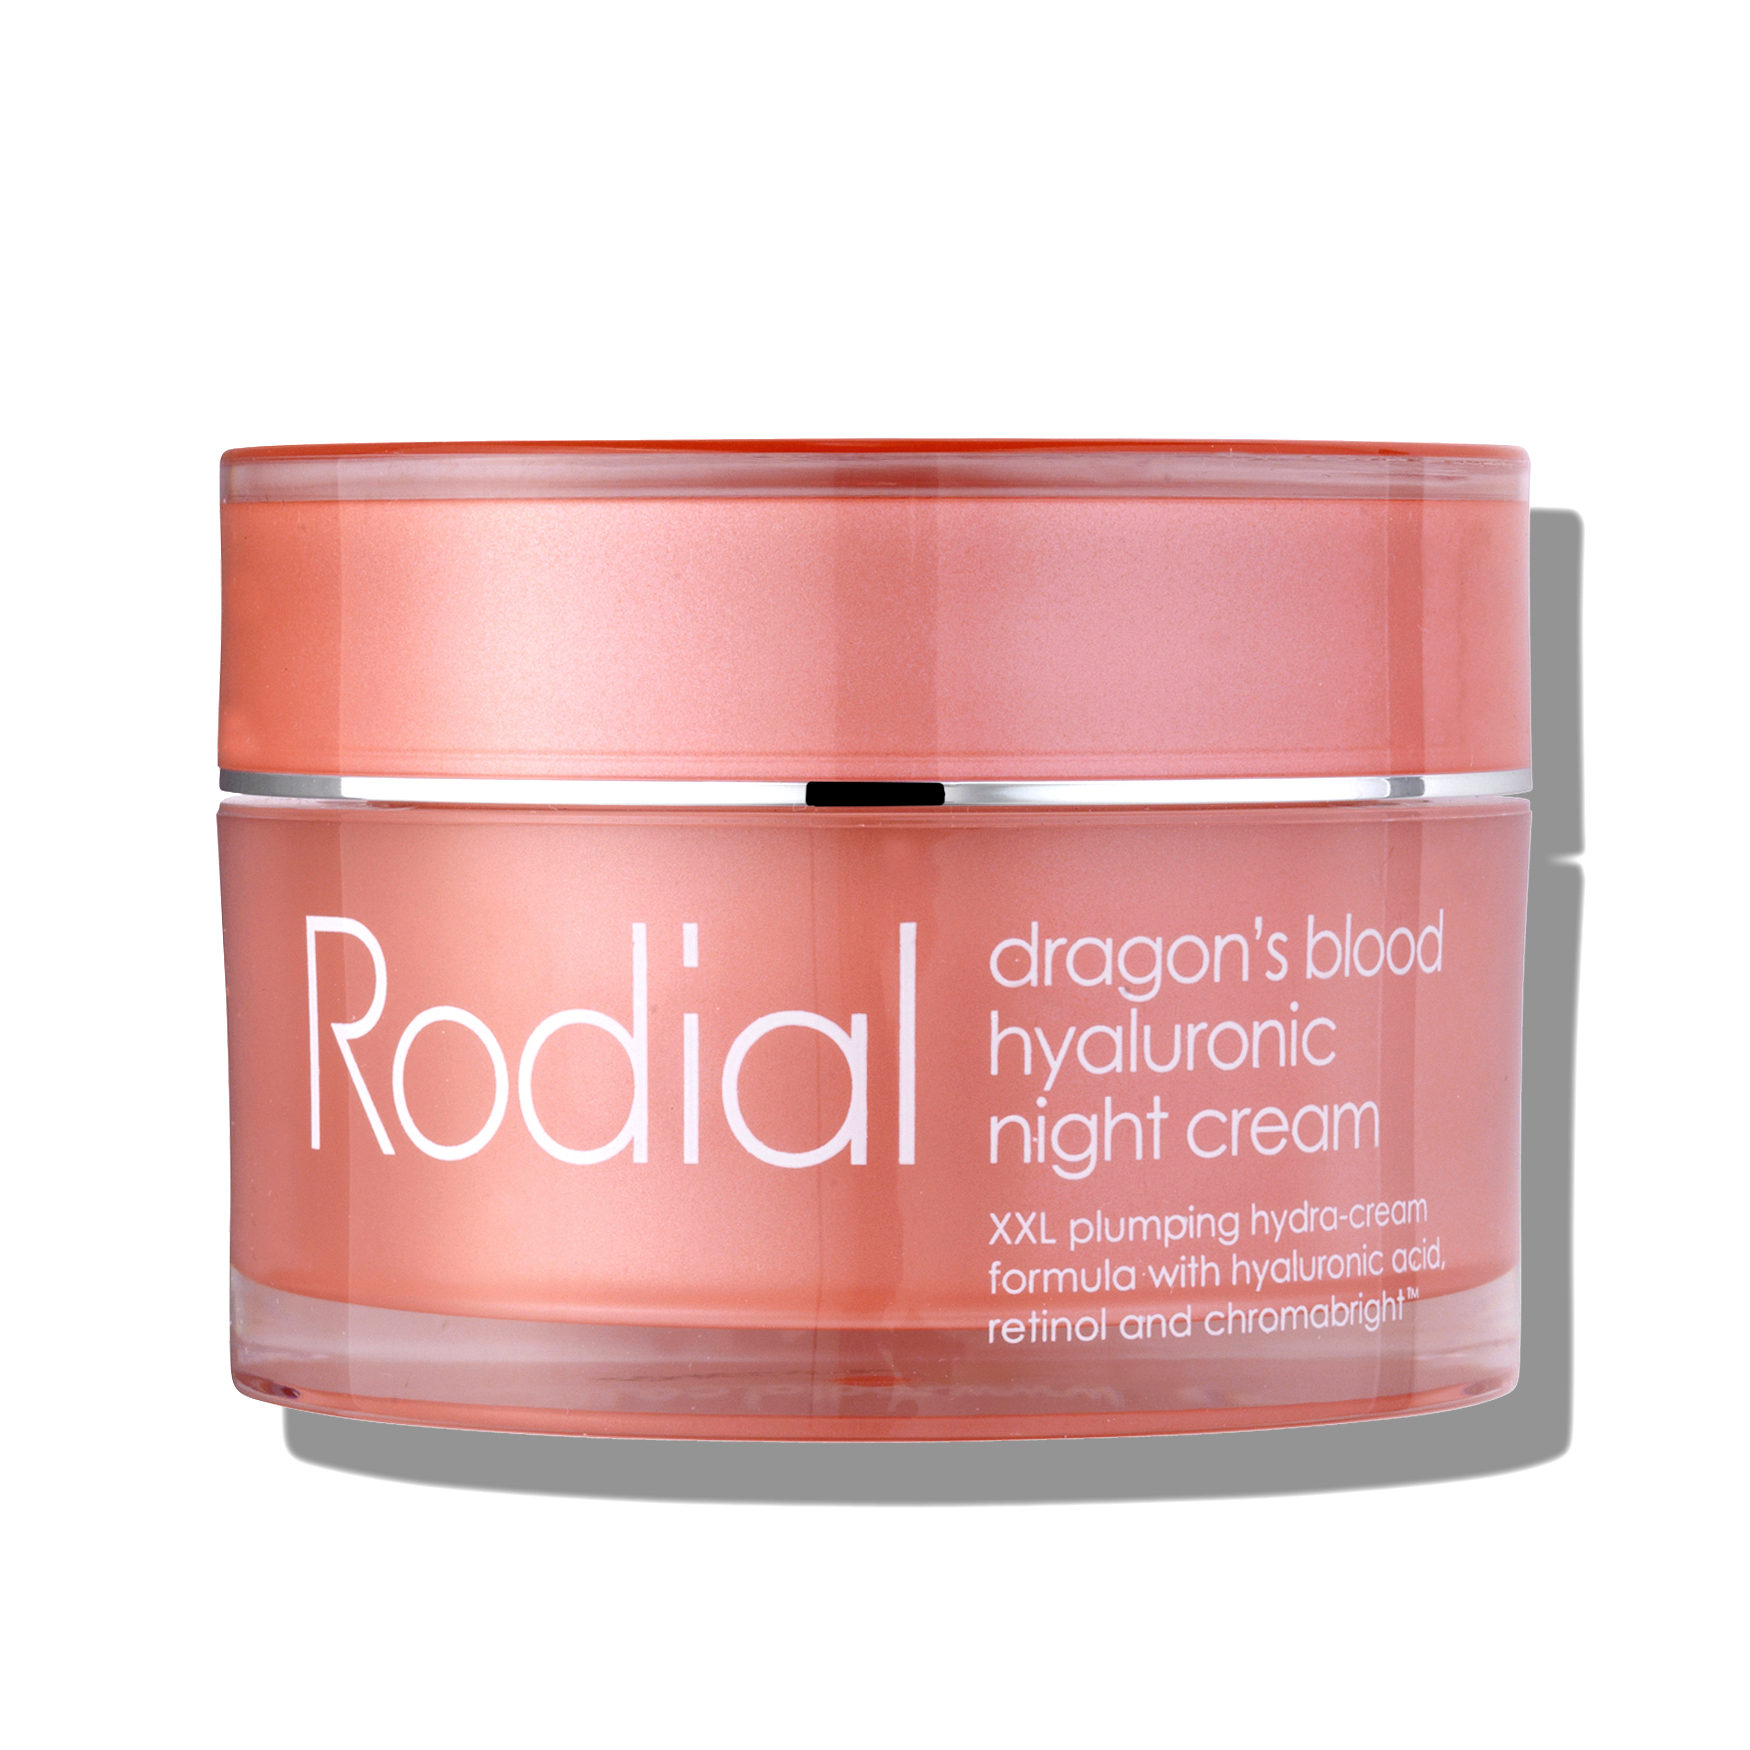 Rodial Dragon's Blood Night Cream | Space NK